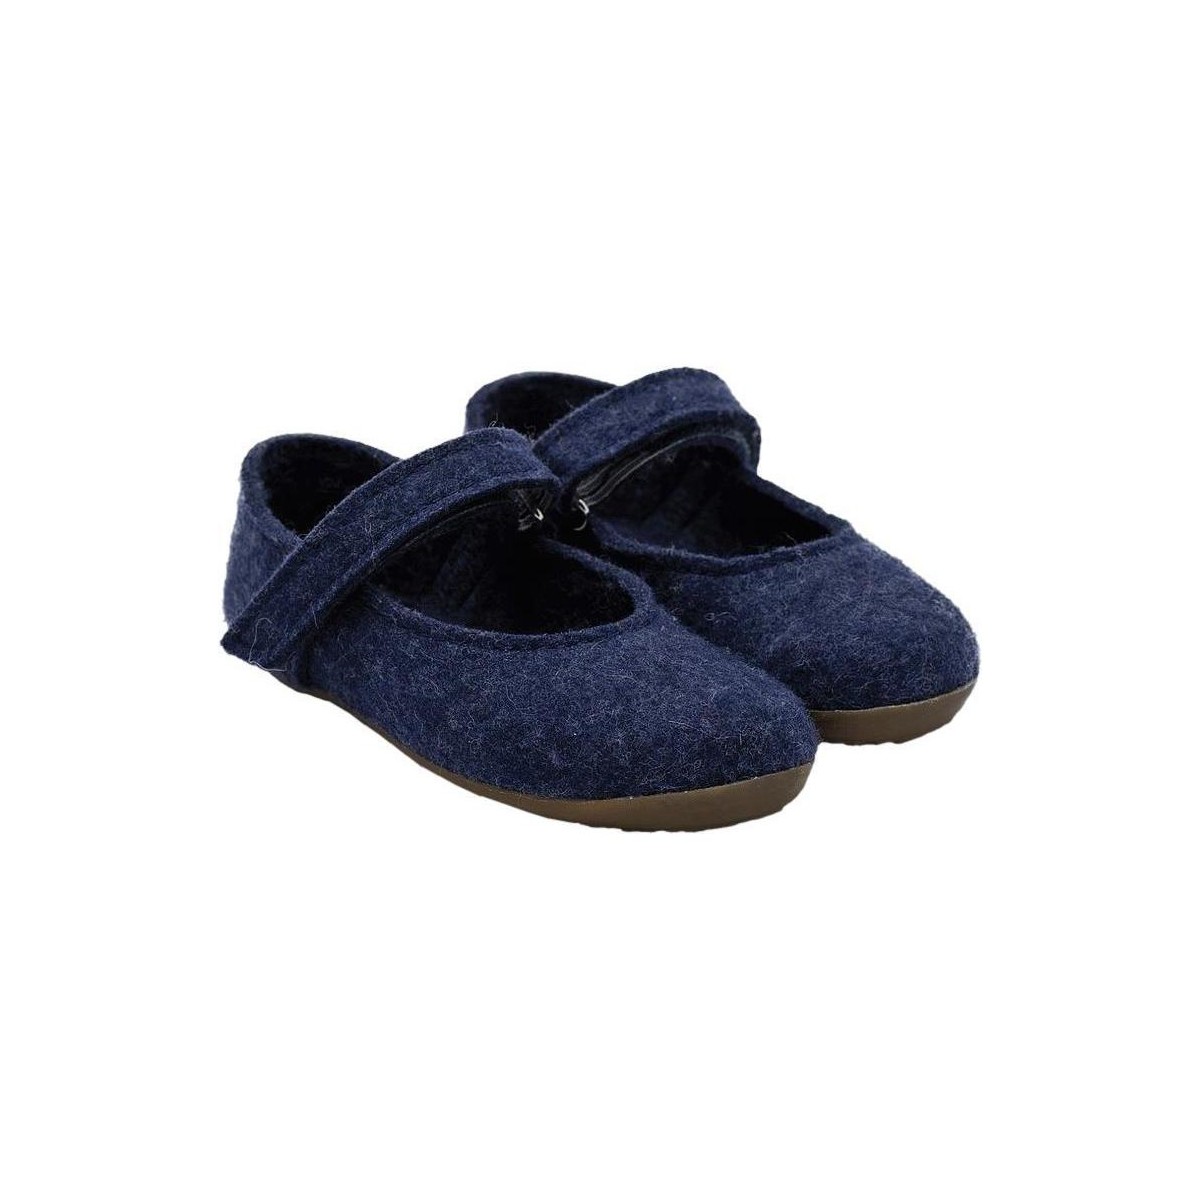 Zapatos Niños Pantuflas Haflinger 48102972 Azul